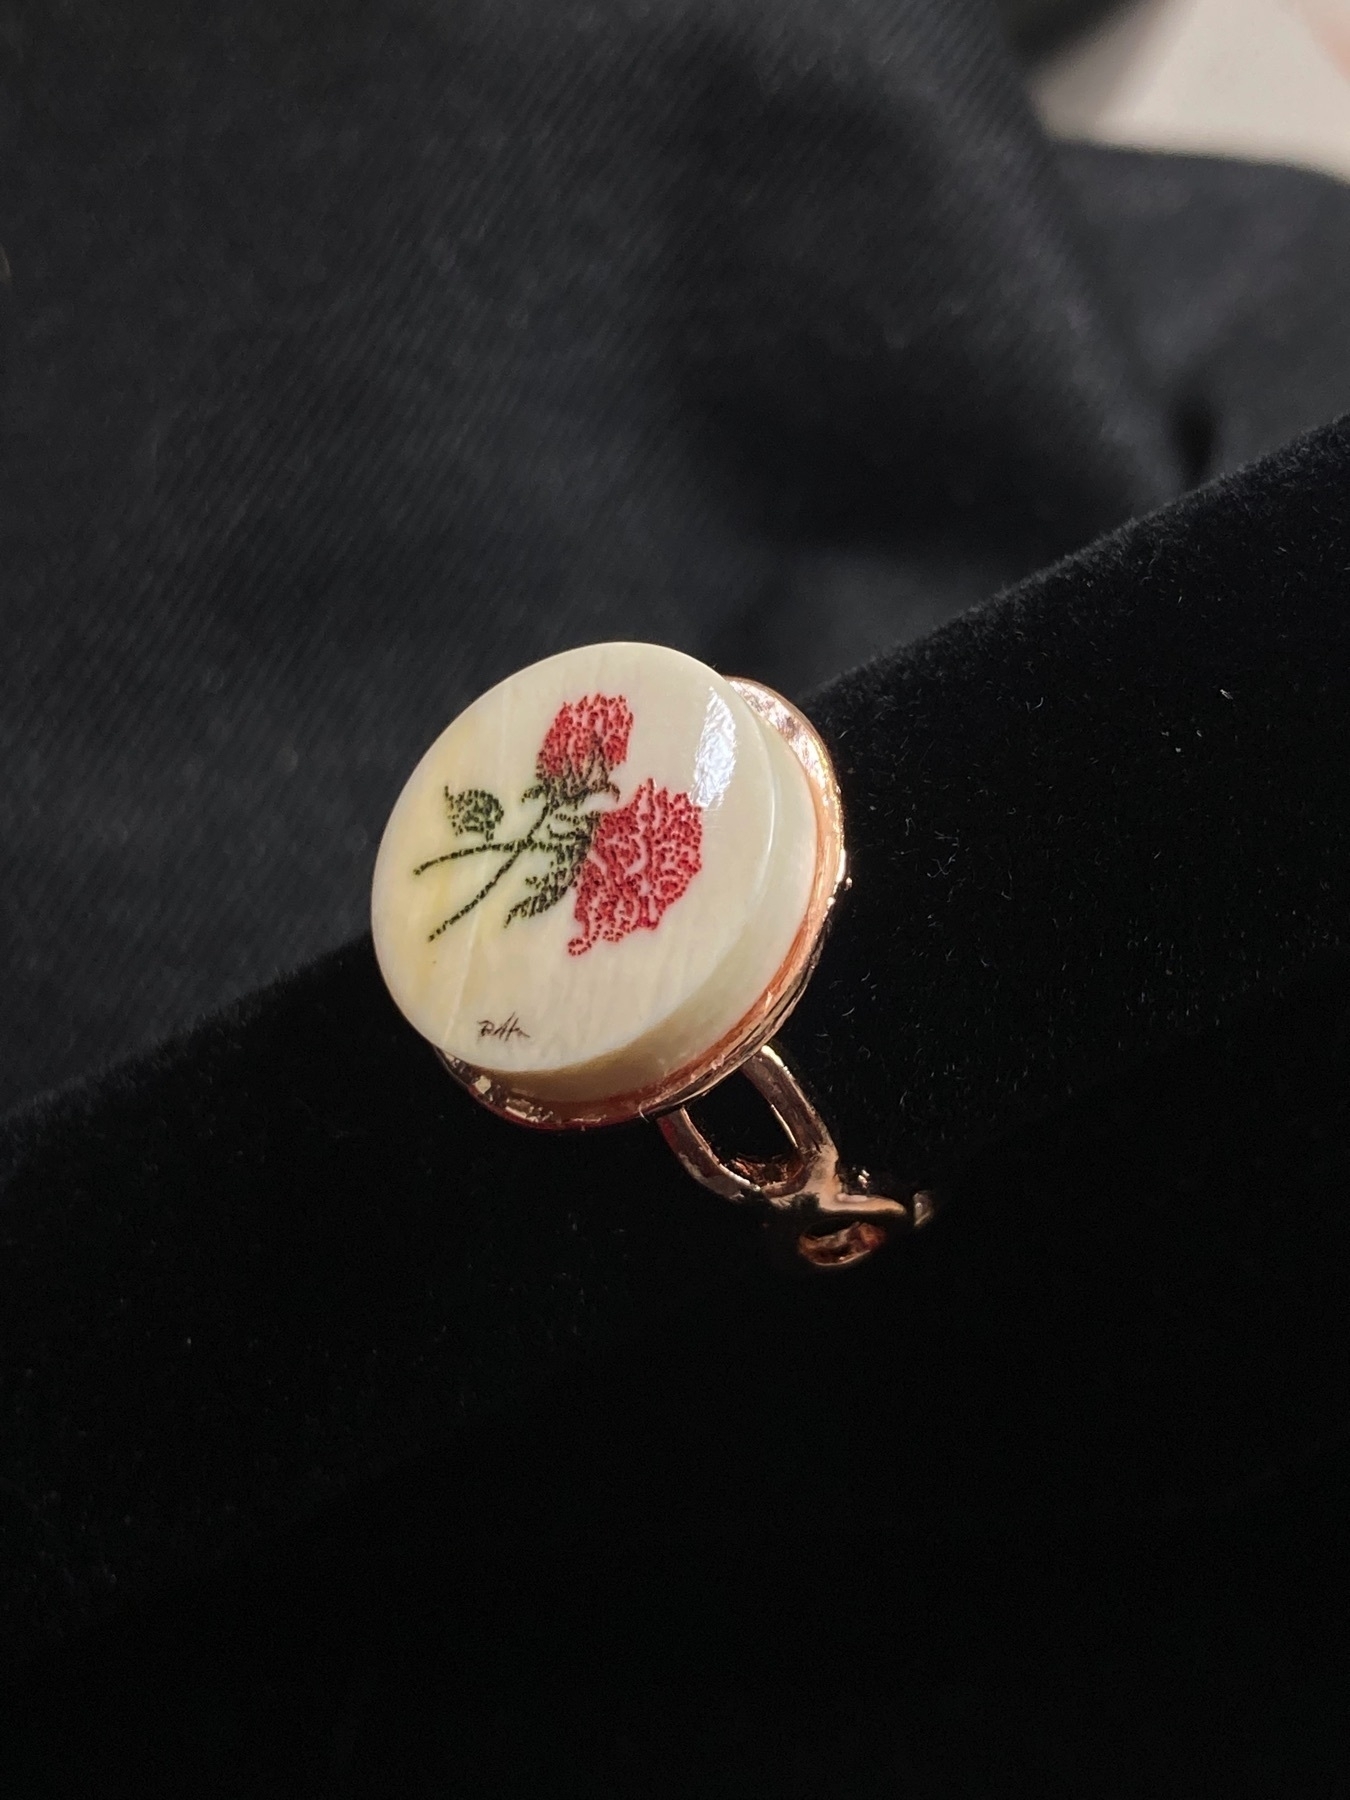 scrimshaw roses ring by Della Chelpka